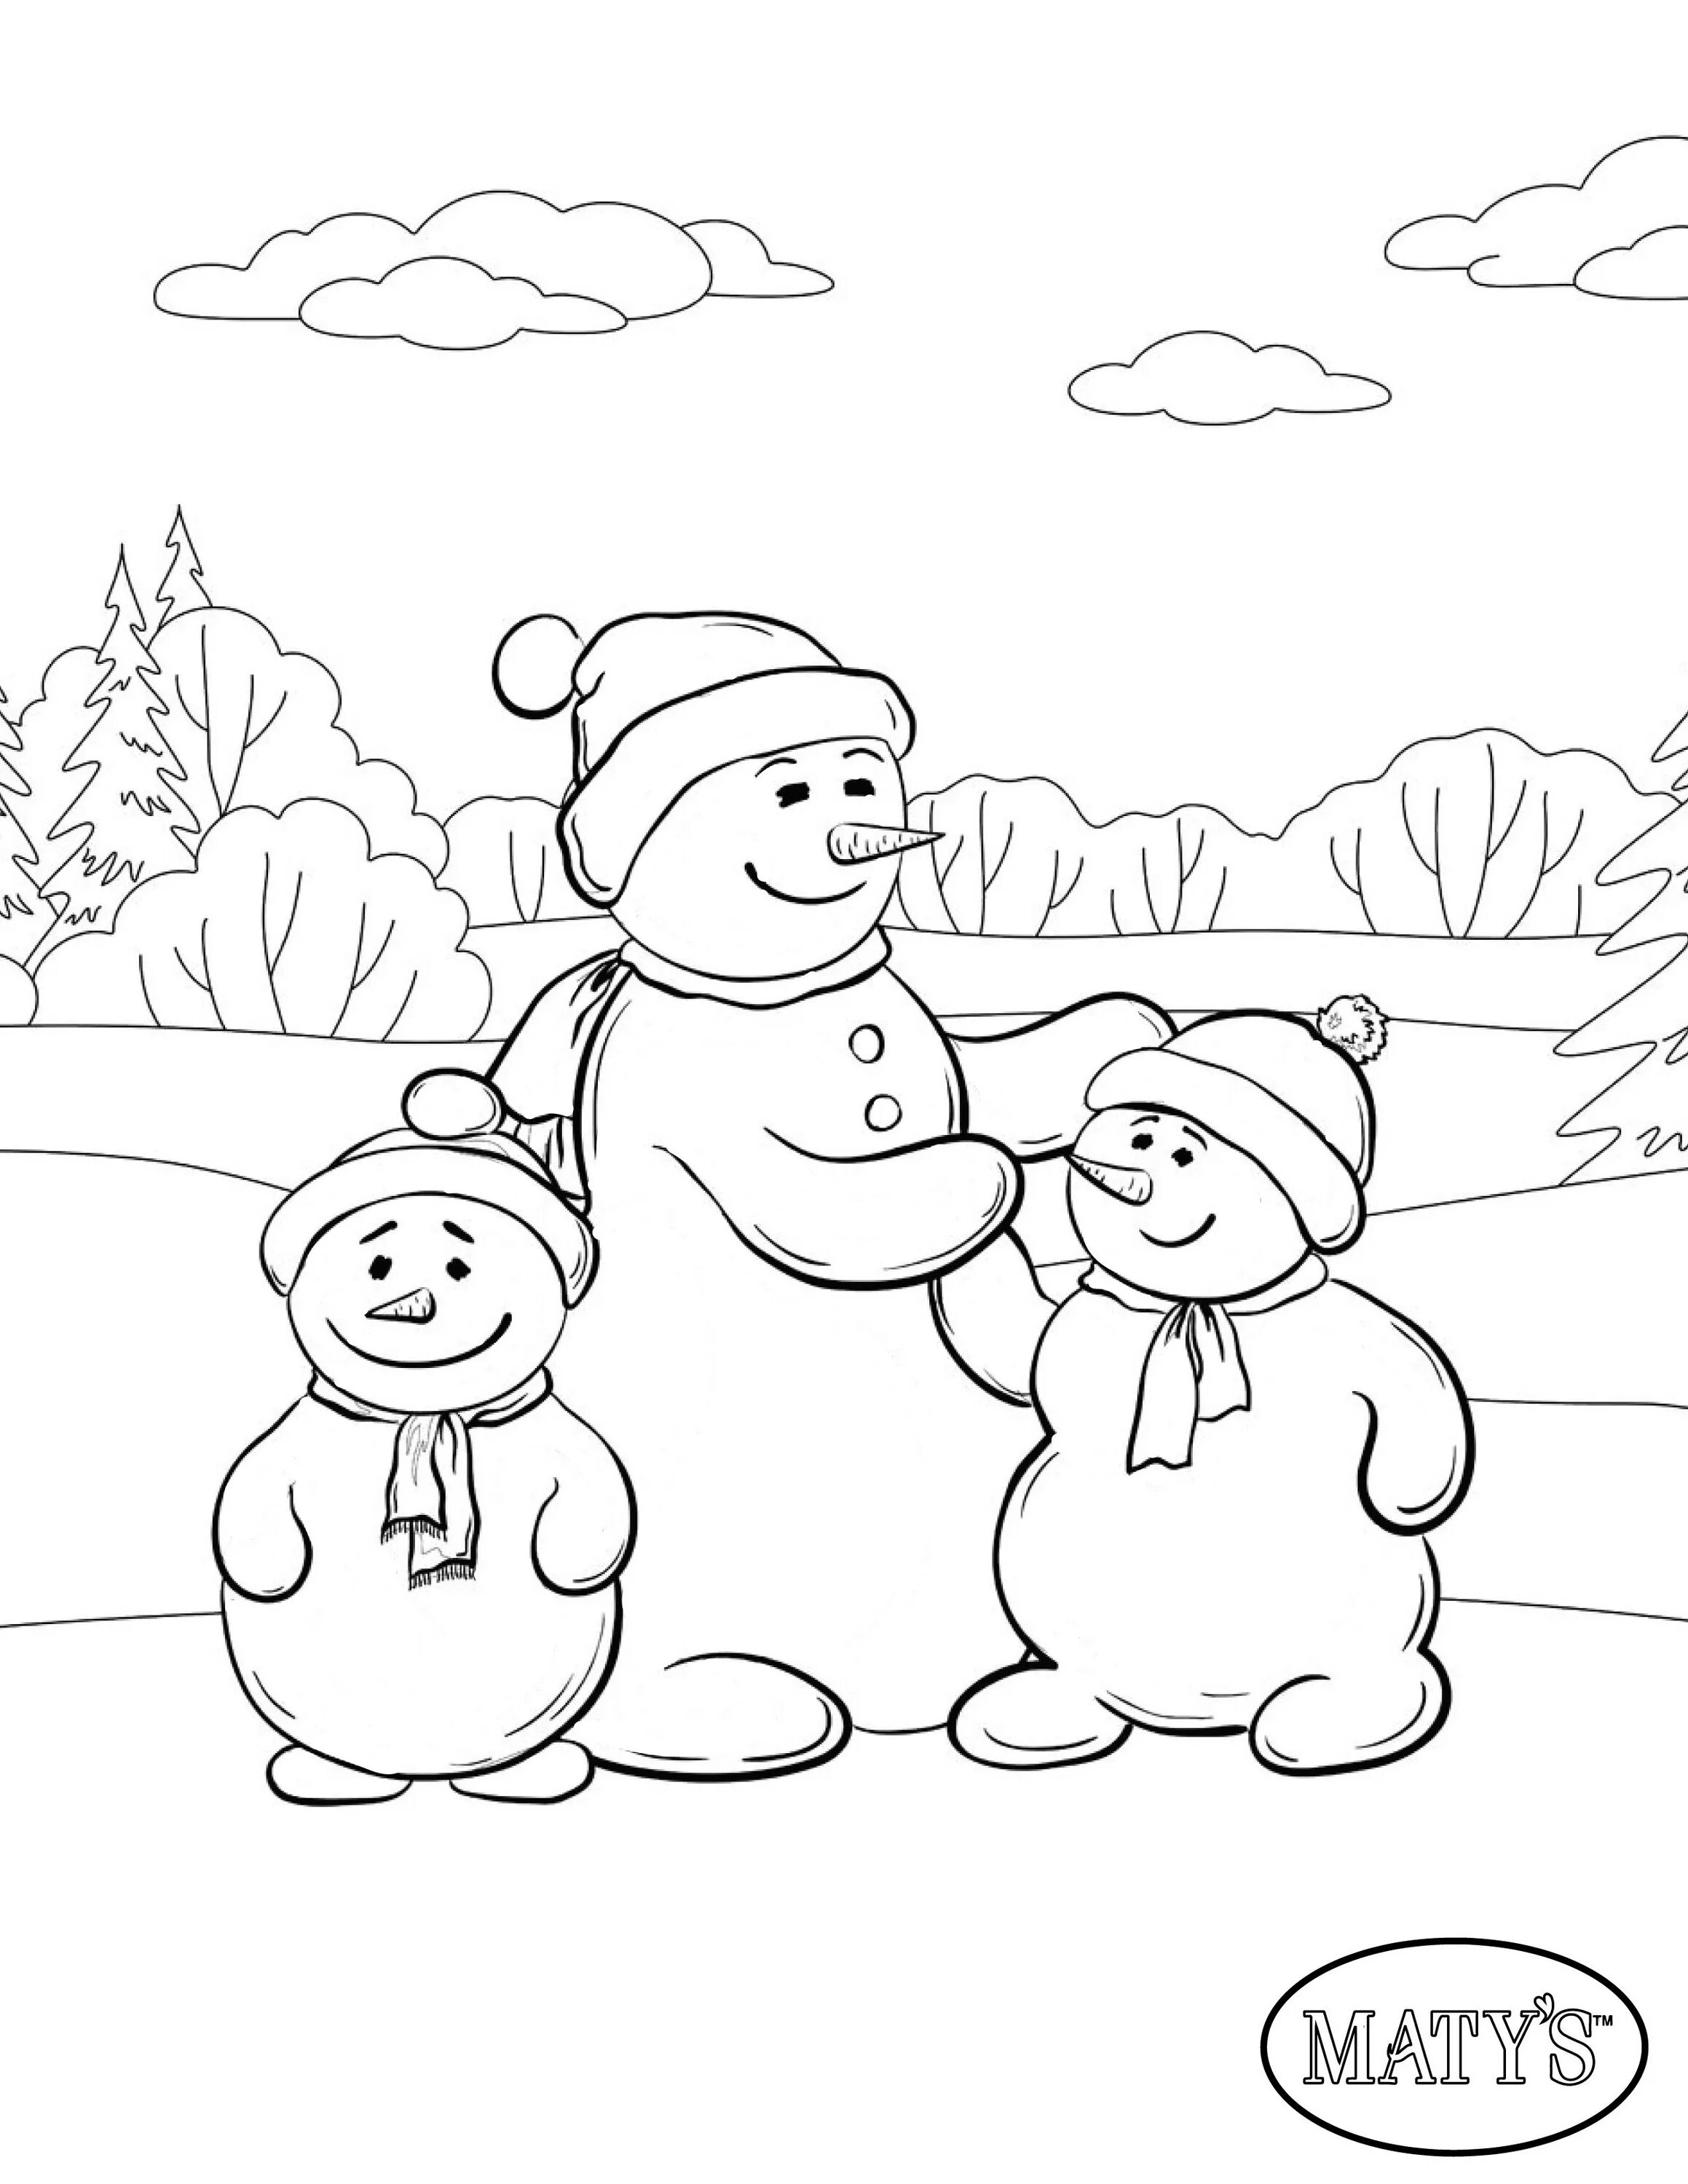 Fun winter coloring book for kids